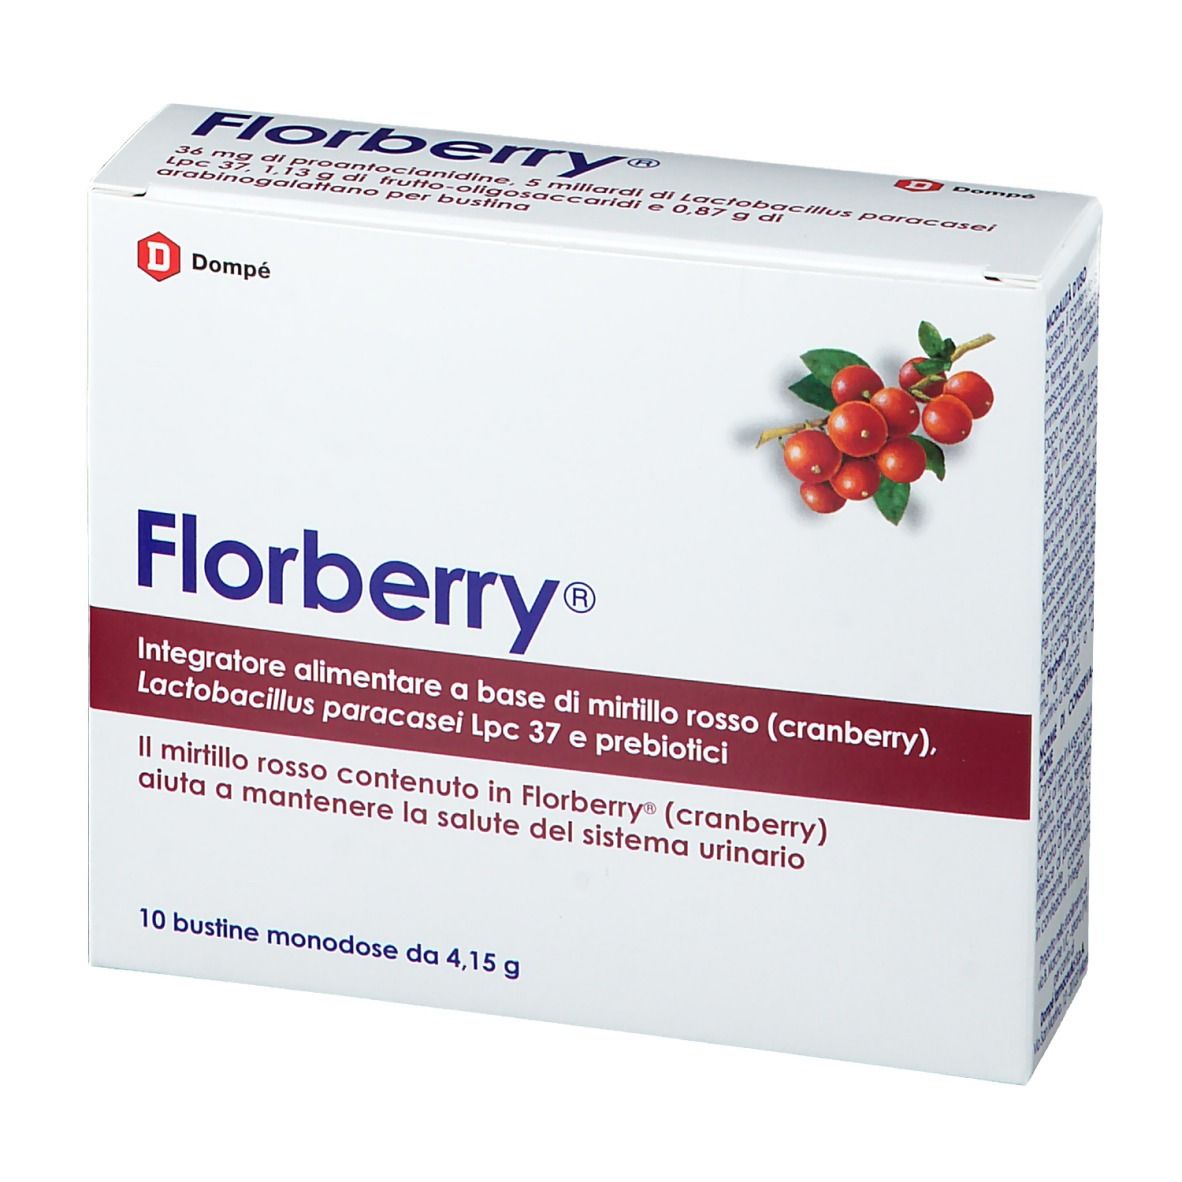 BRACCO Florberry®